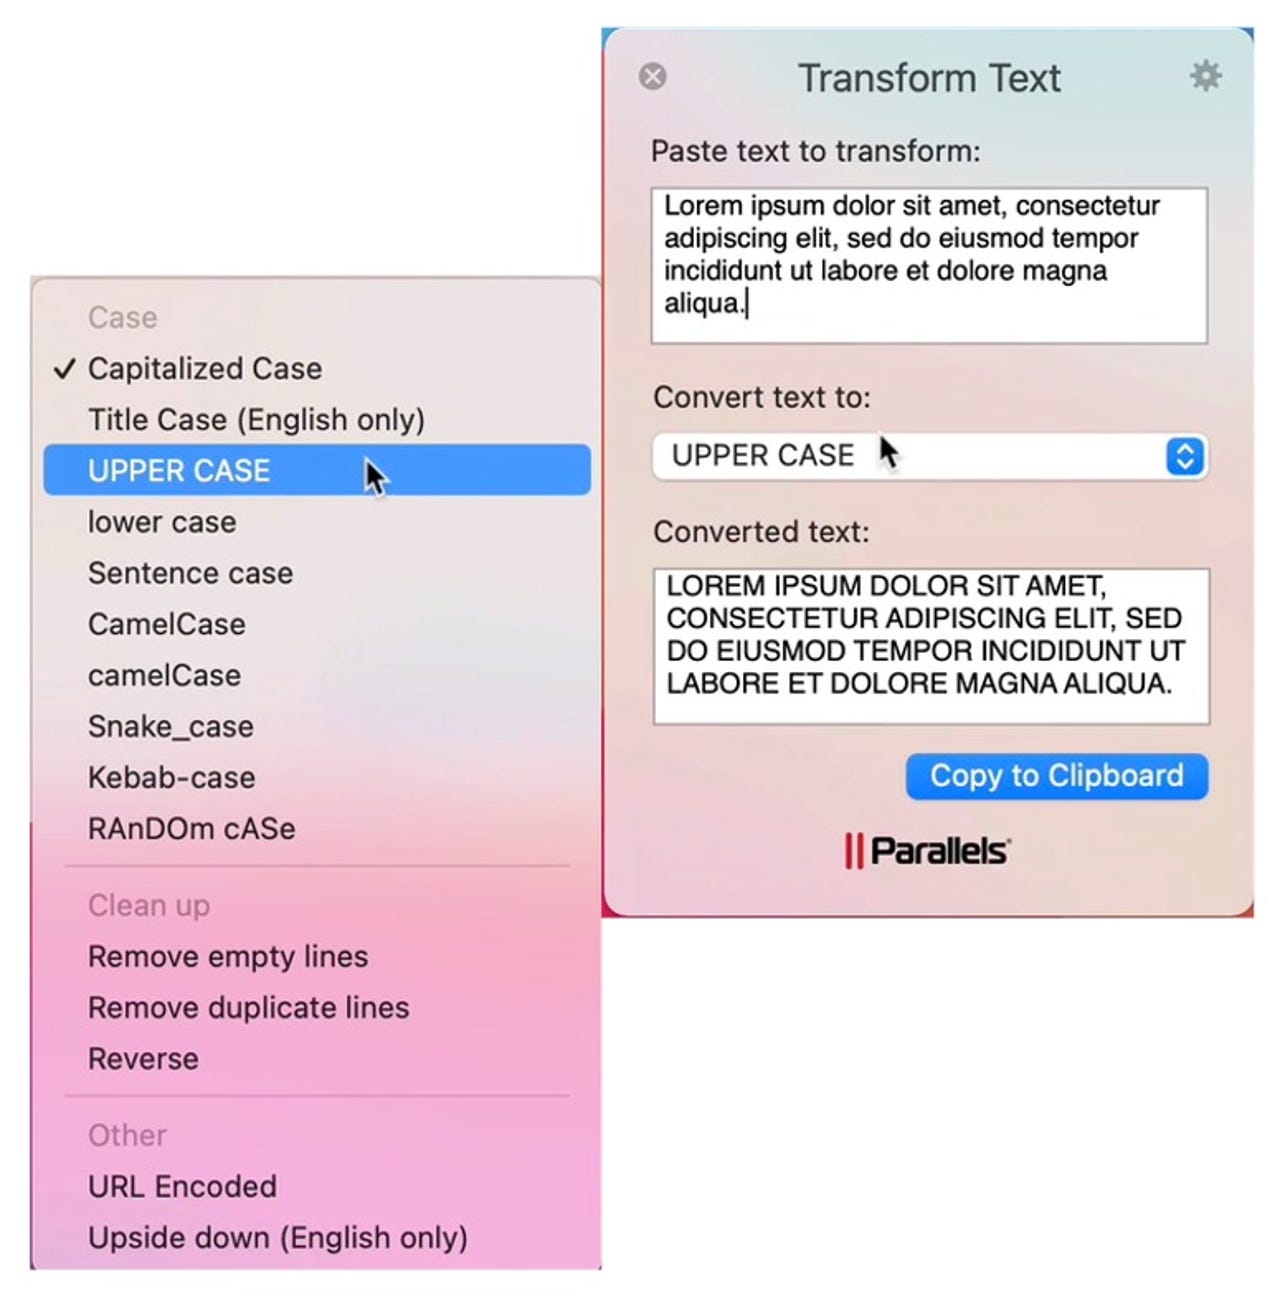 Transform Text tool